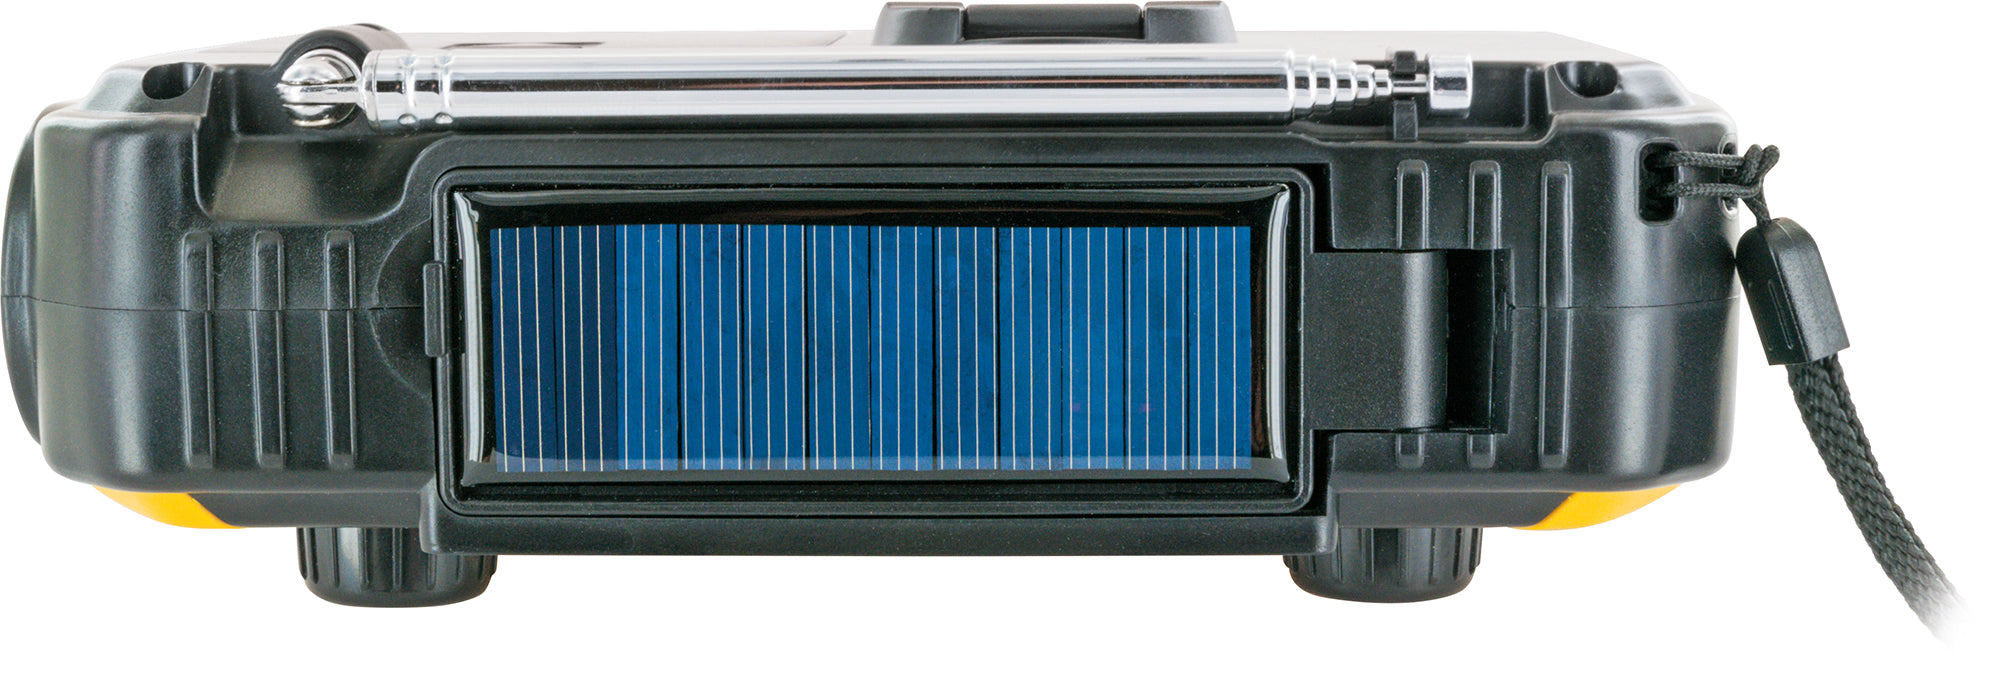 FM outdoor radio with solar panel, flashlight & power bank function